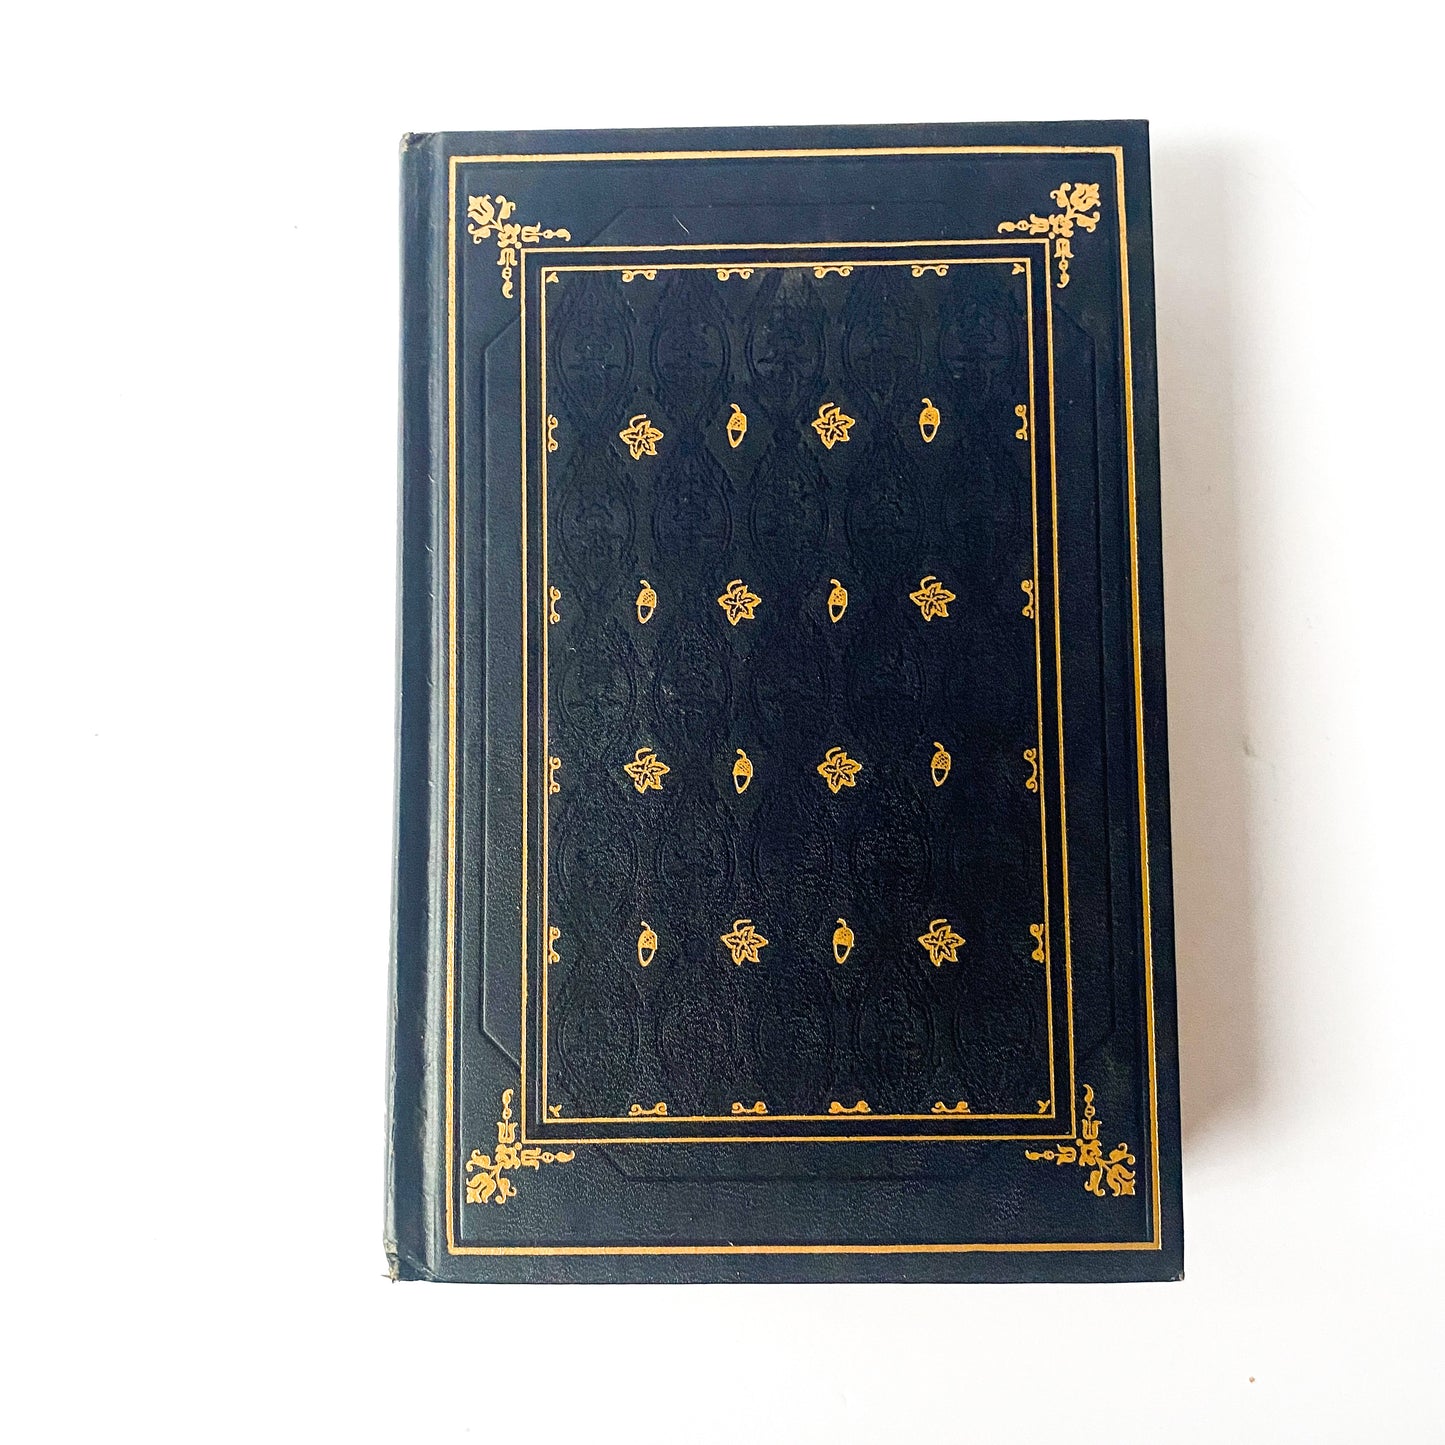 Vintage hardcover book, All The Kings Men by Robert Penn Warren, International Collectors Library